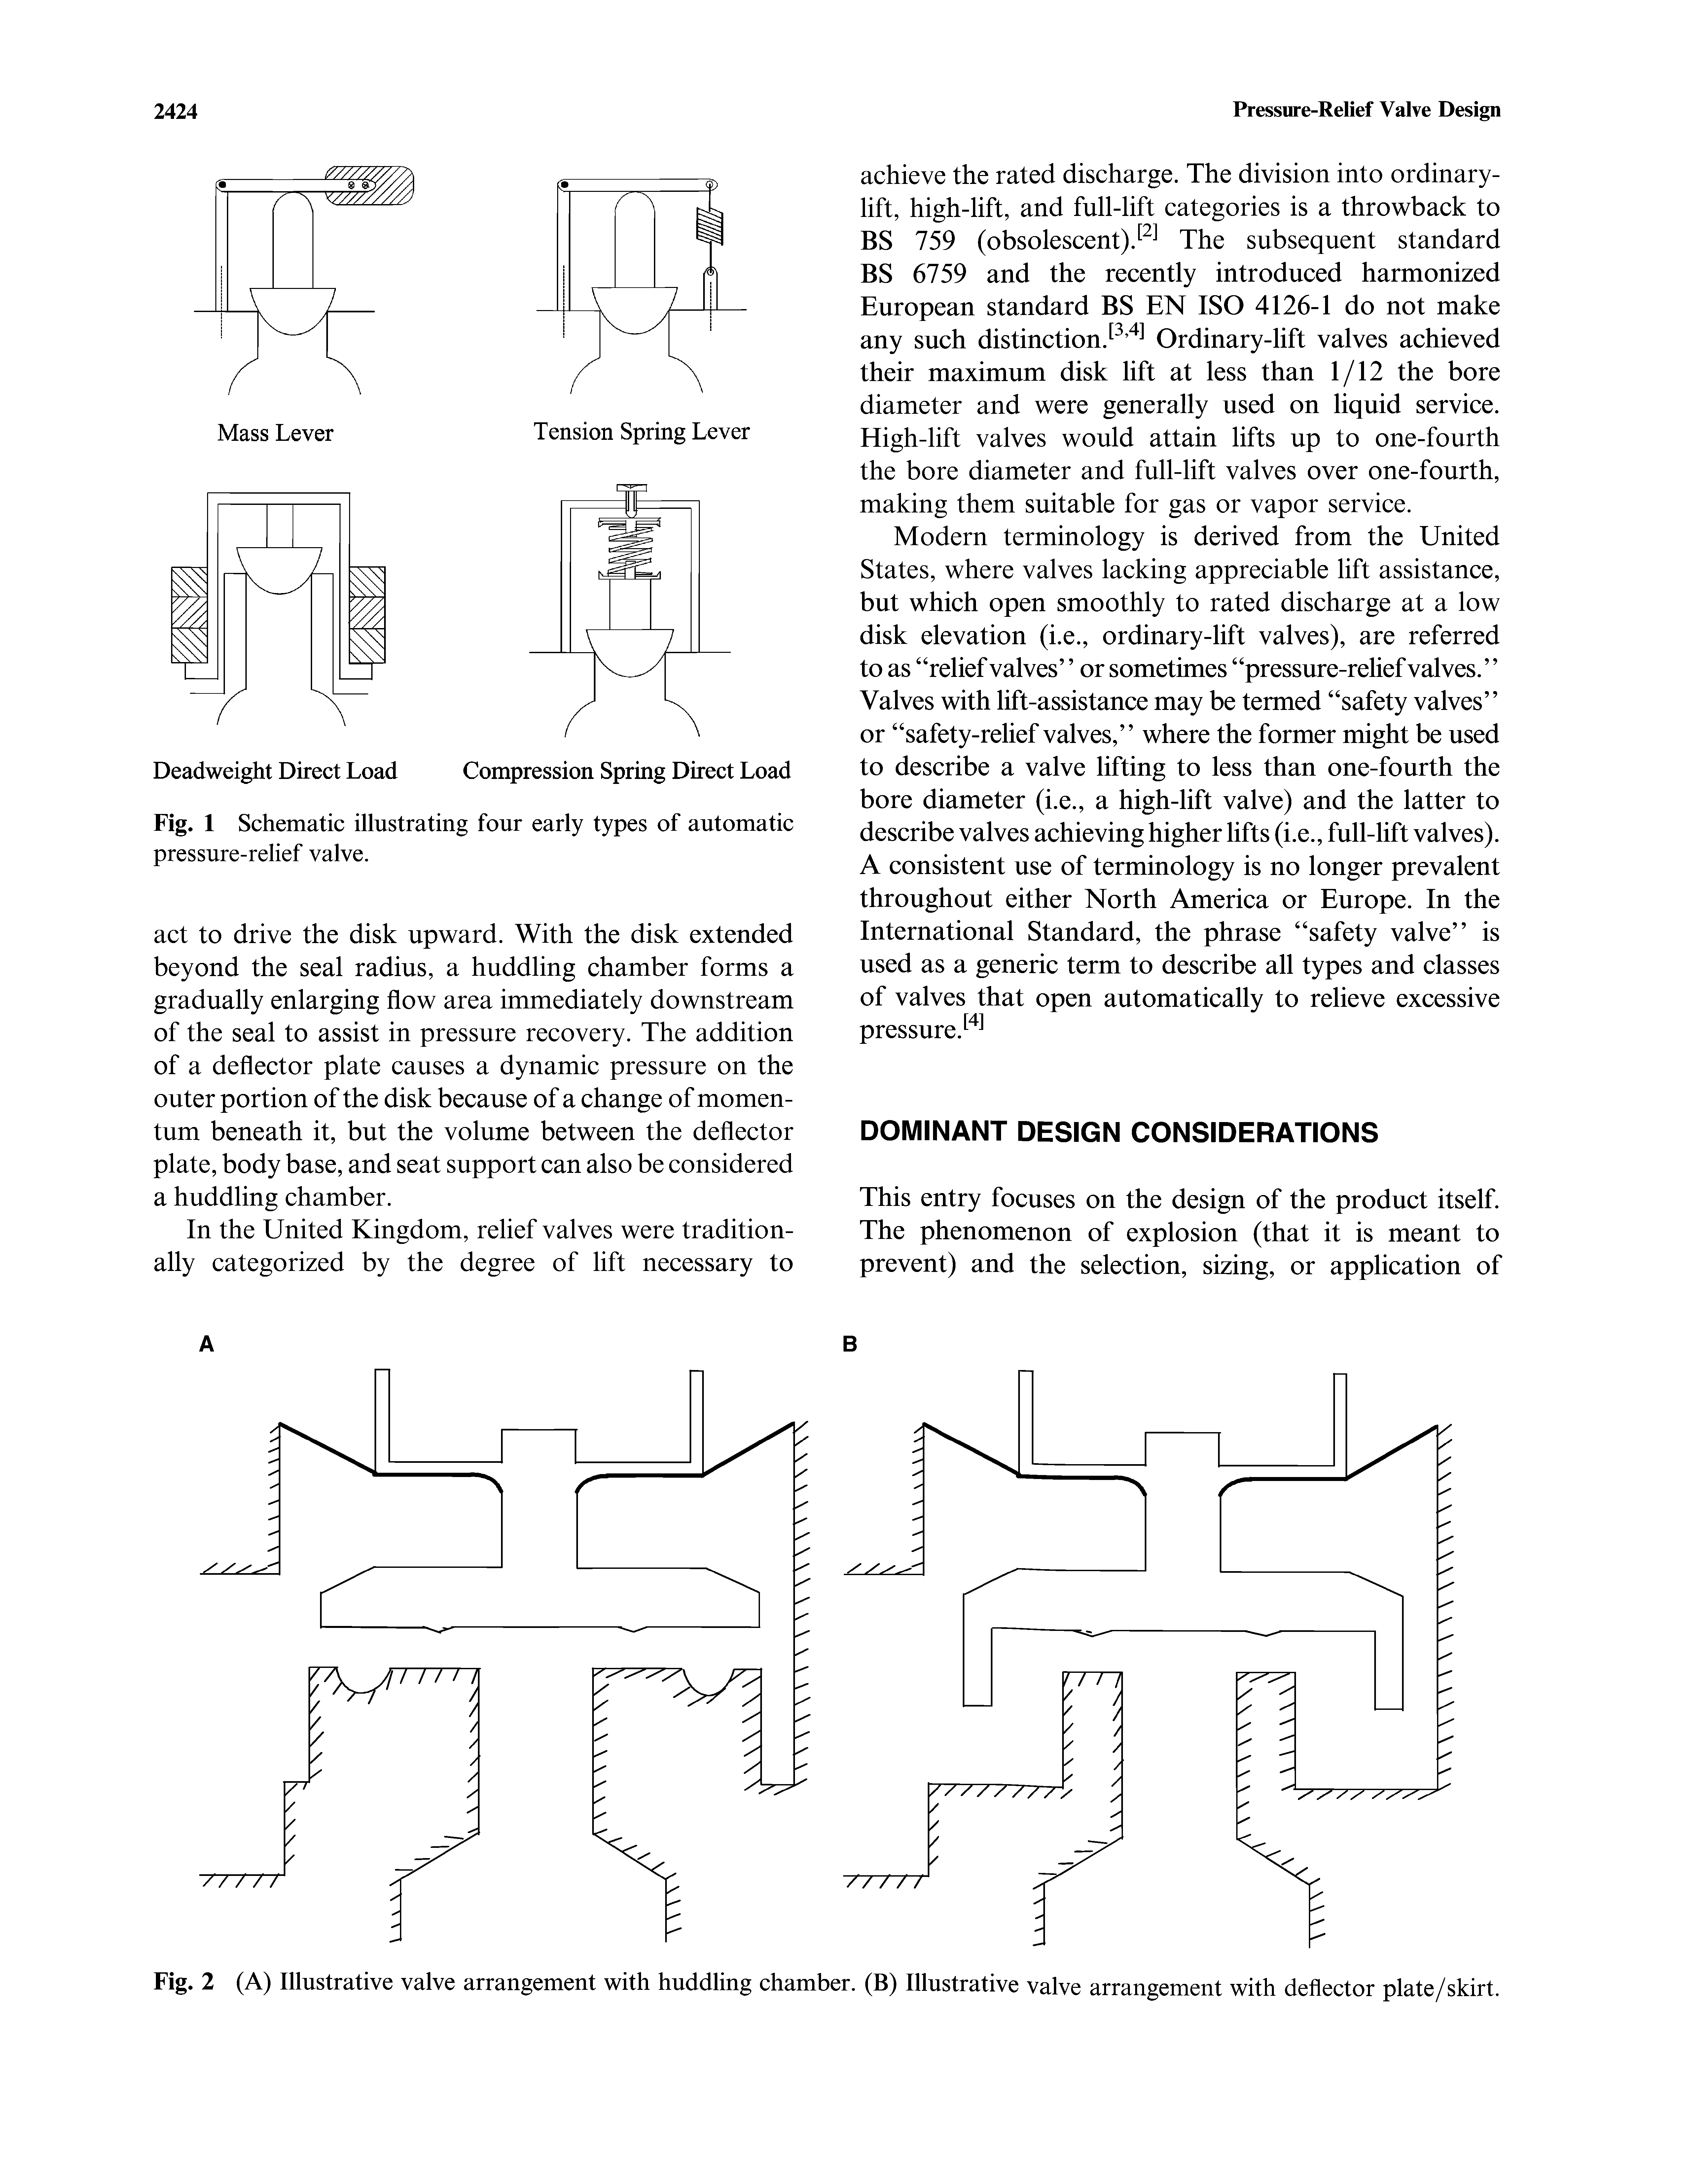 Fig. 2 (A) Illustrative valve arrangement with huddling chamber. (B) Illustrative valve arrangement with deflector plate/skirt.